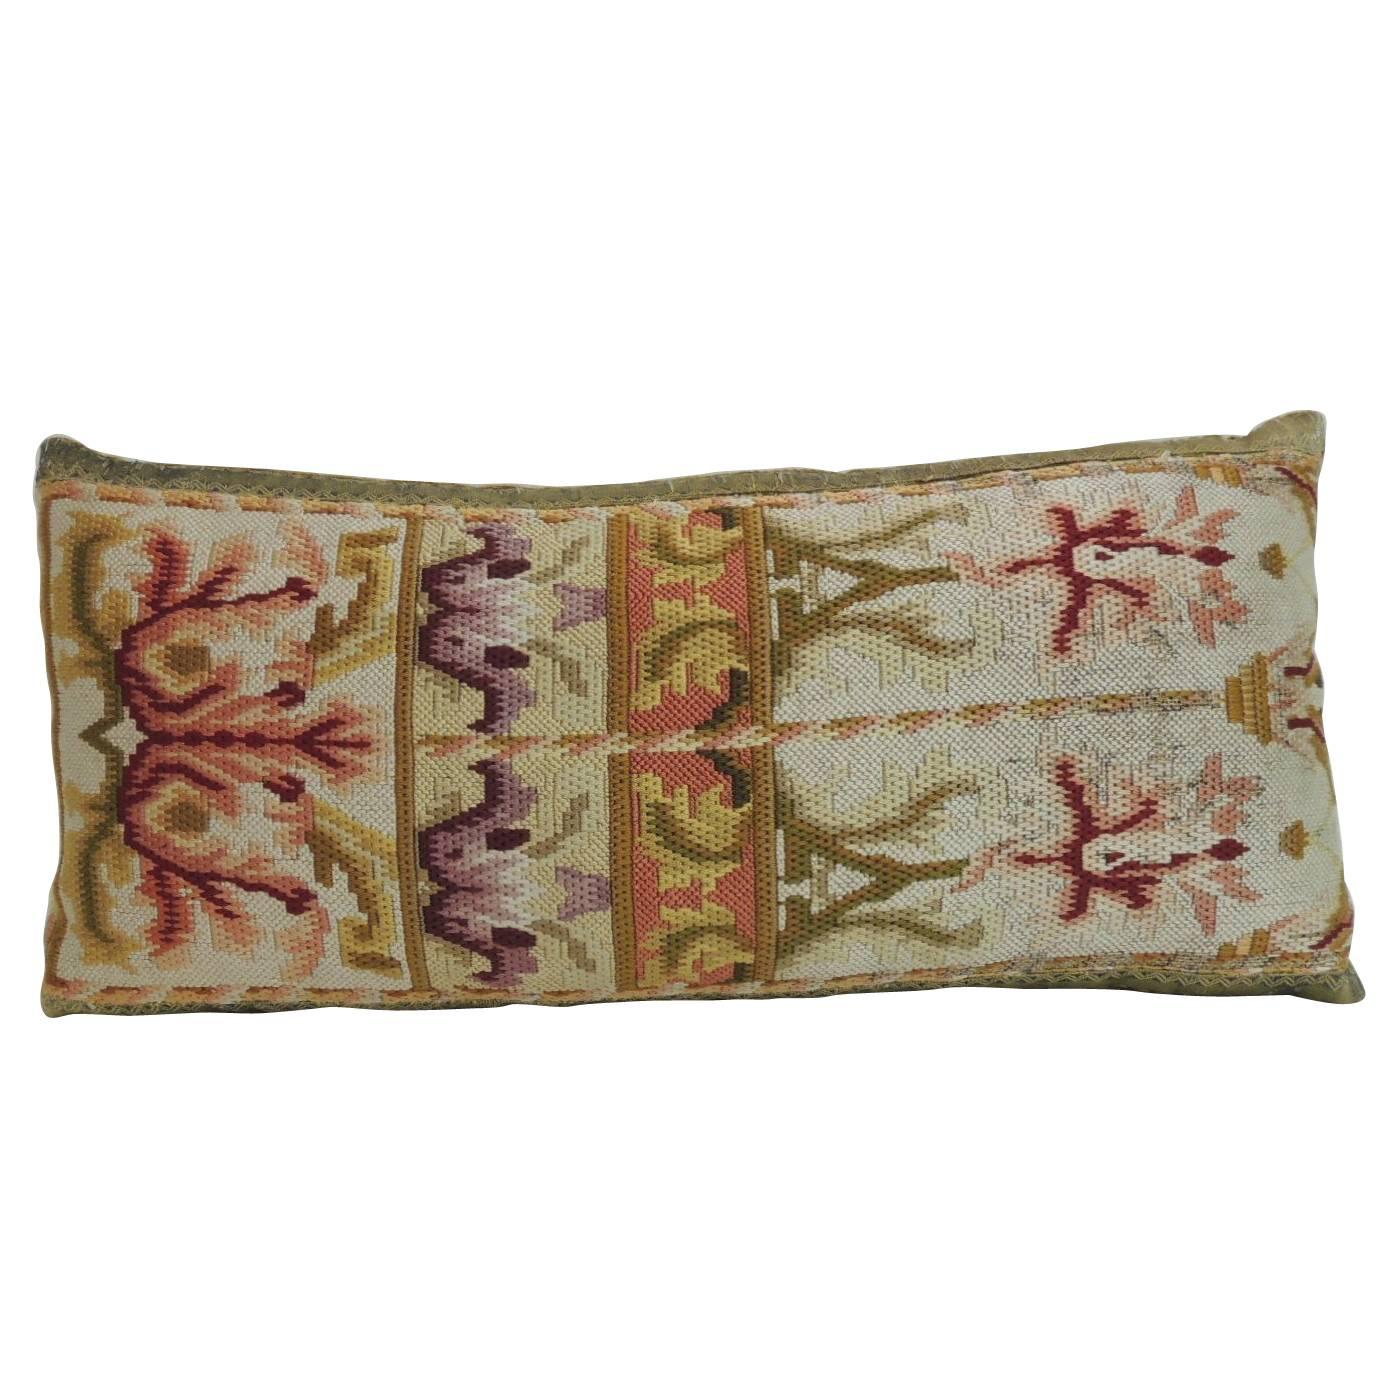 19th Century Orange and Gold Tapestry Decorative Lumbar Pillow